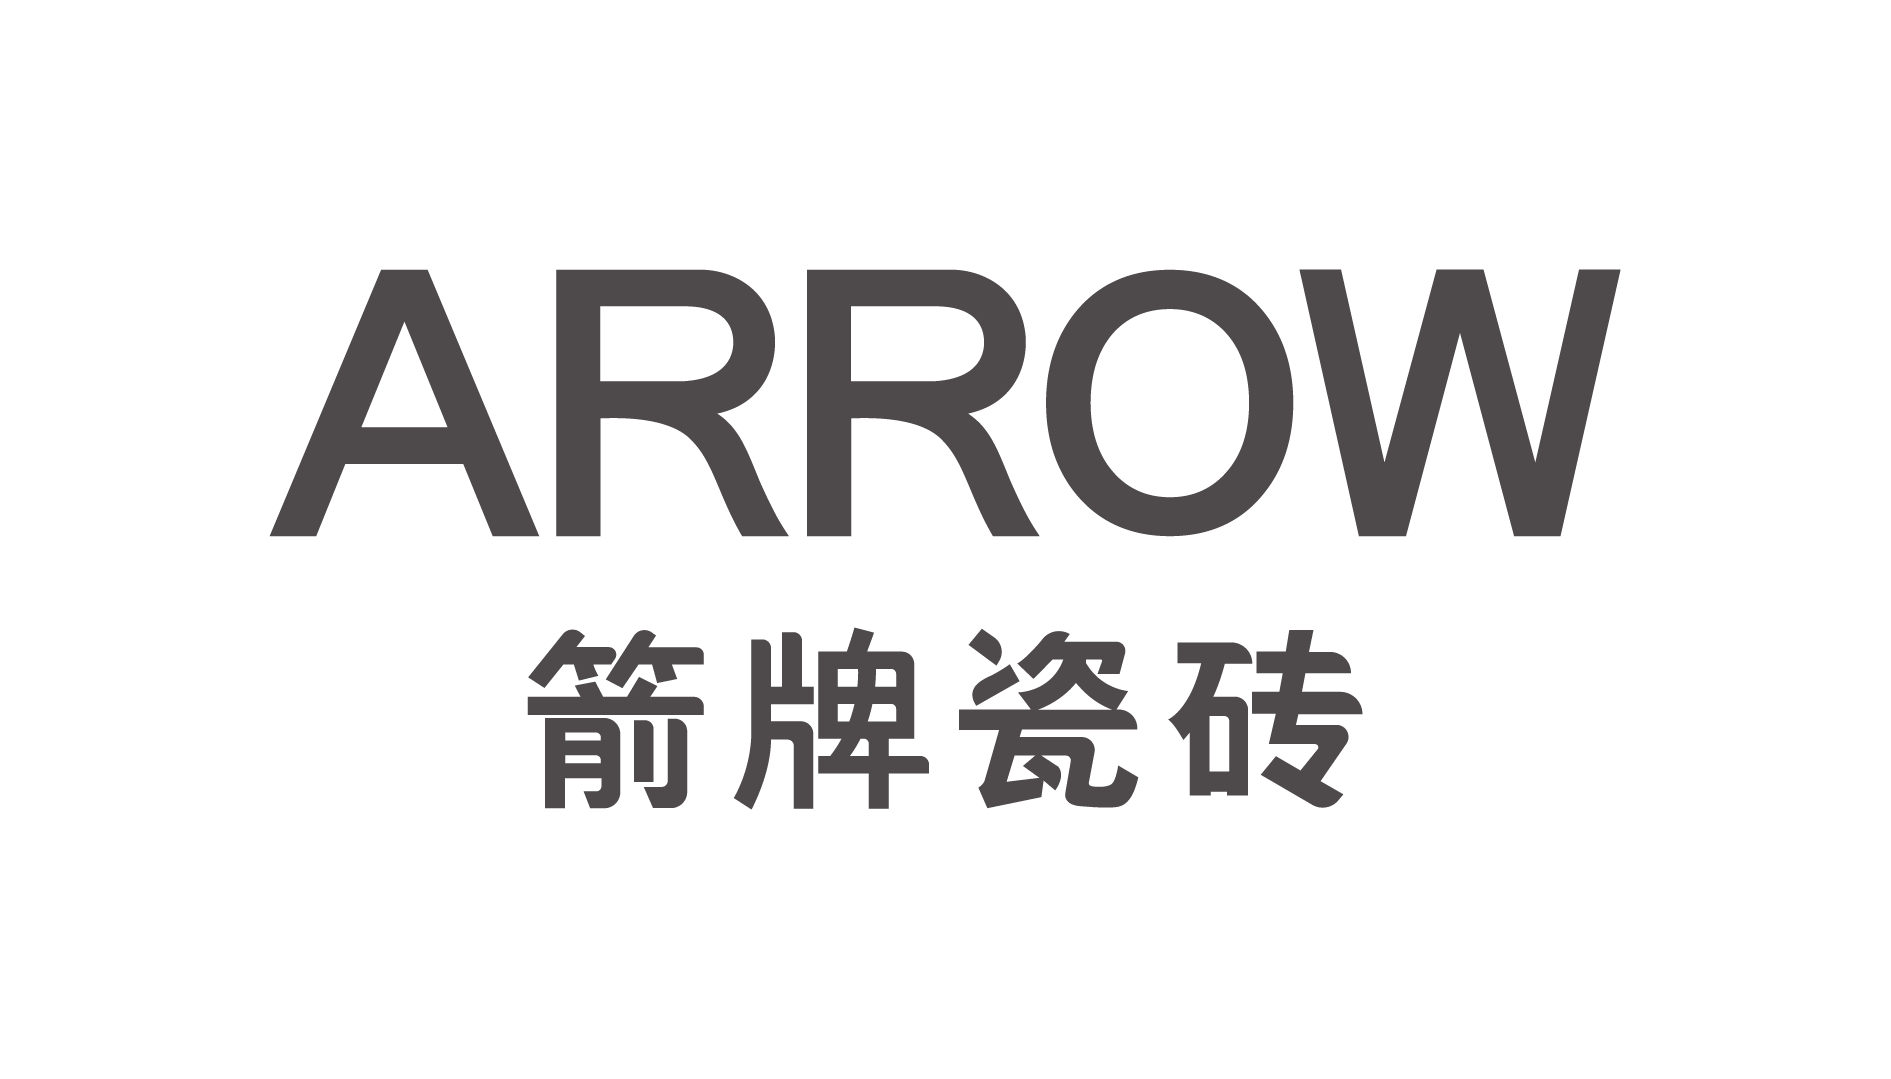 ARROW箭牌复合轻纹砖logo